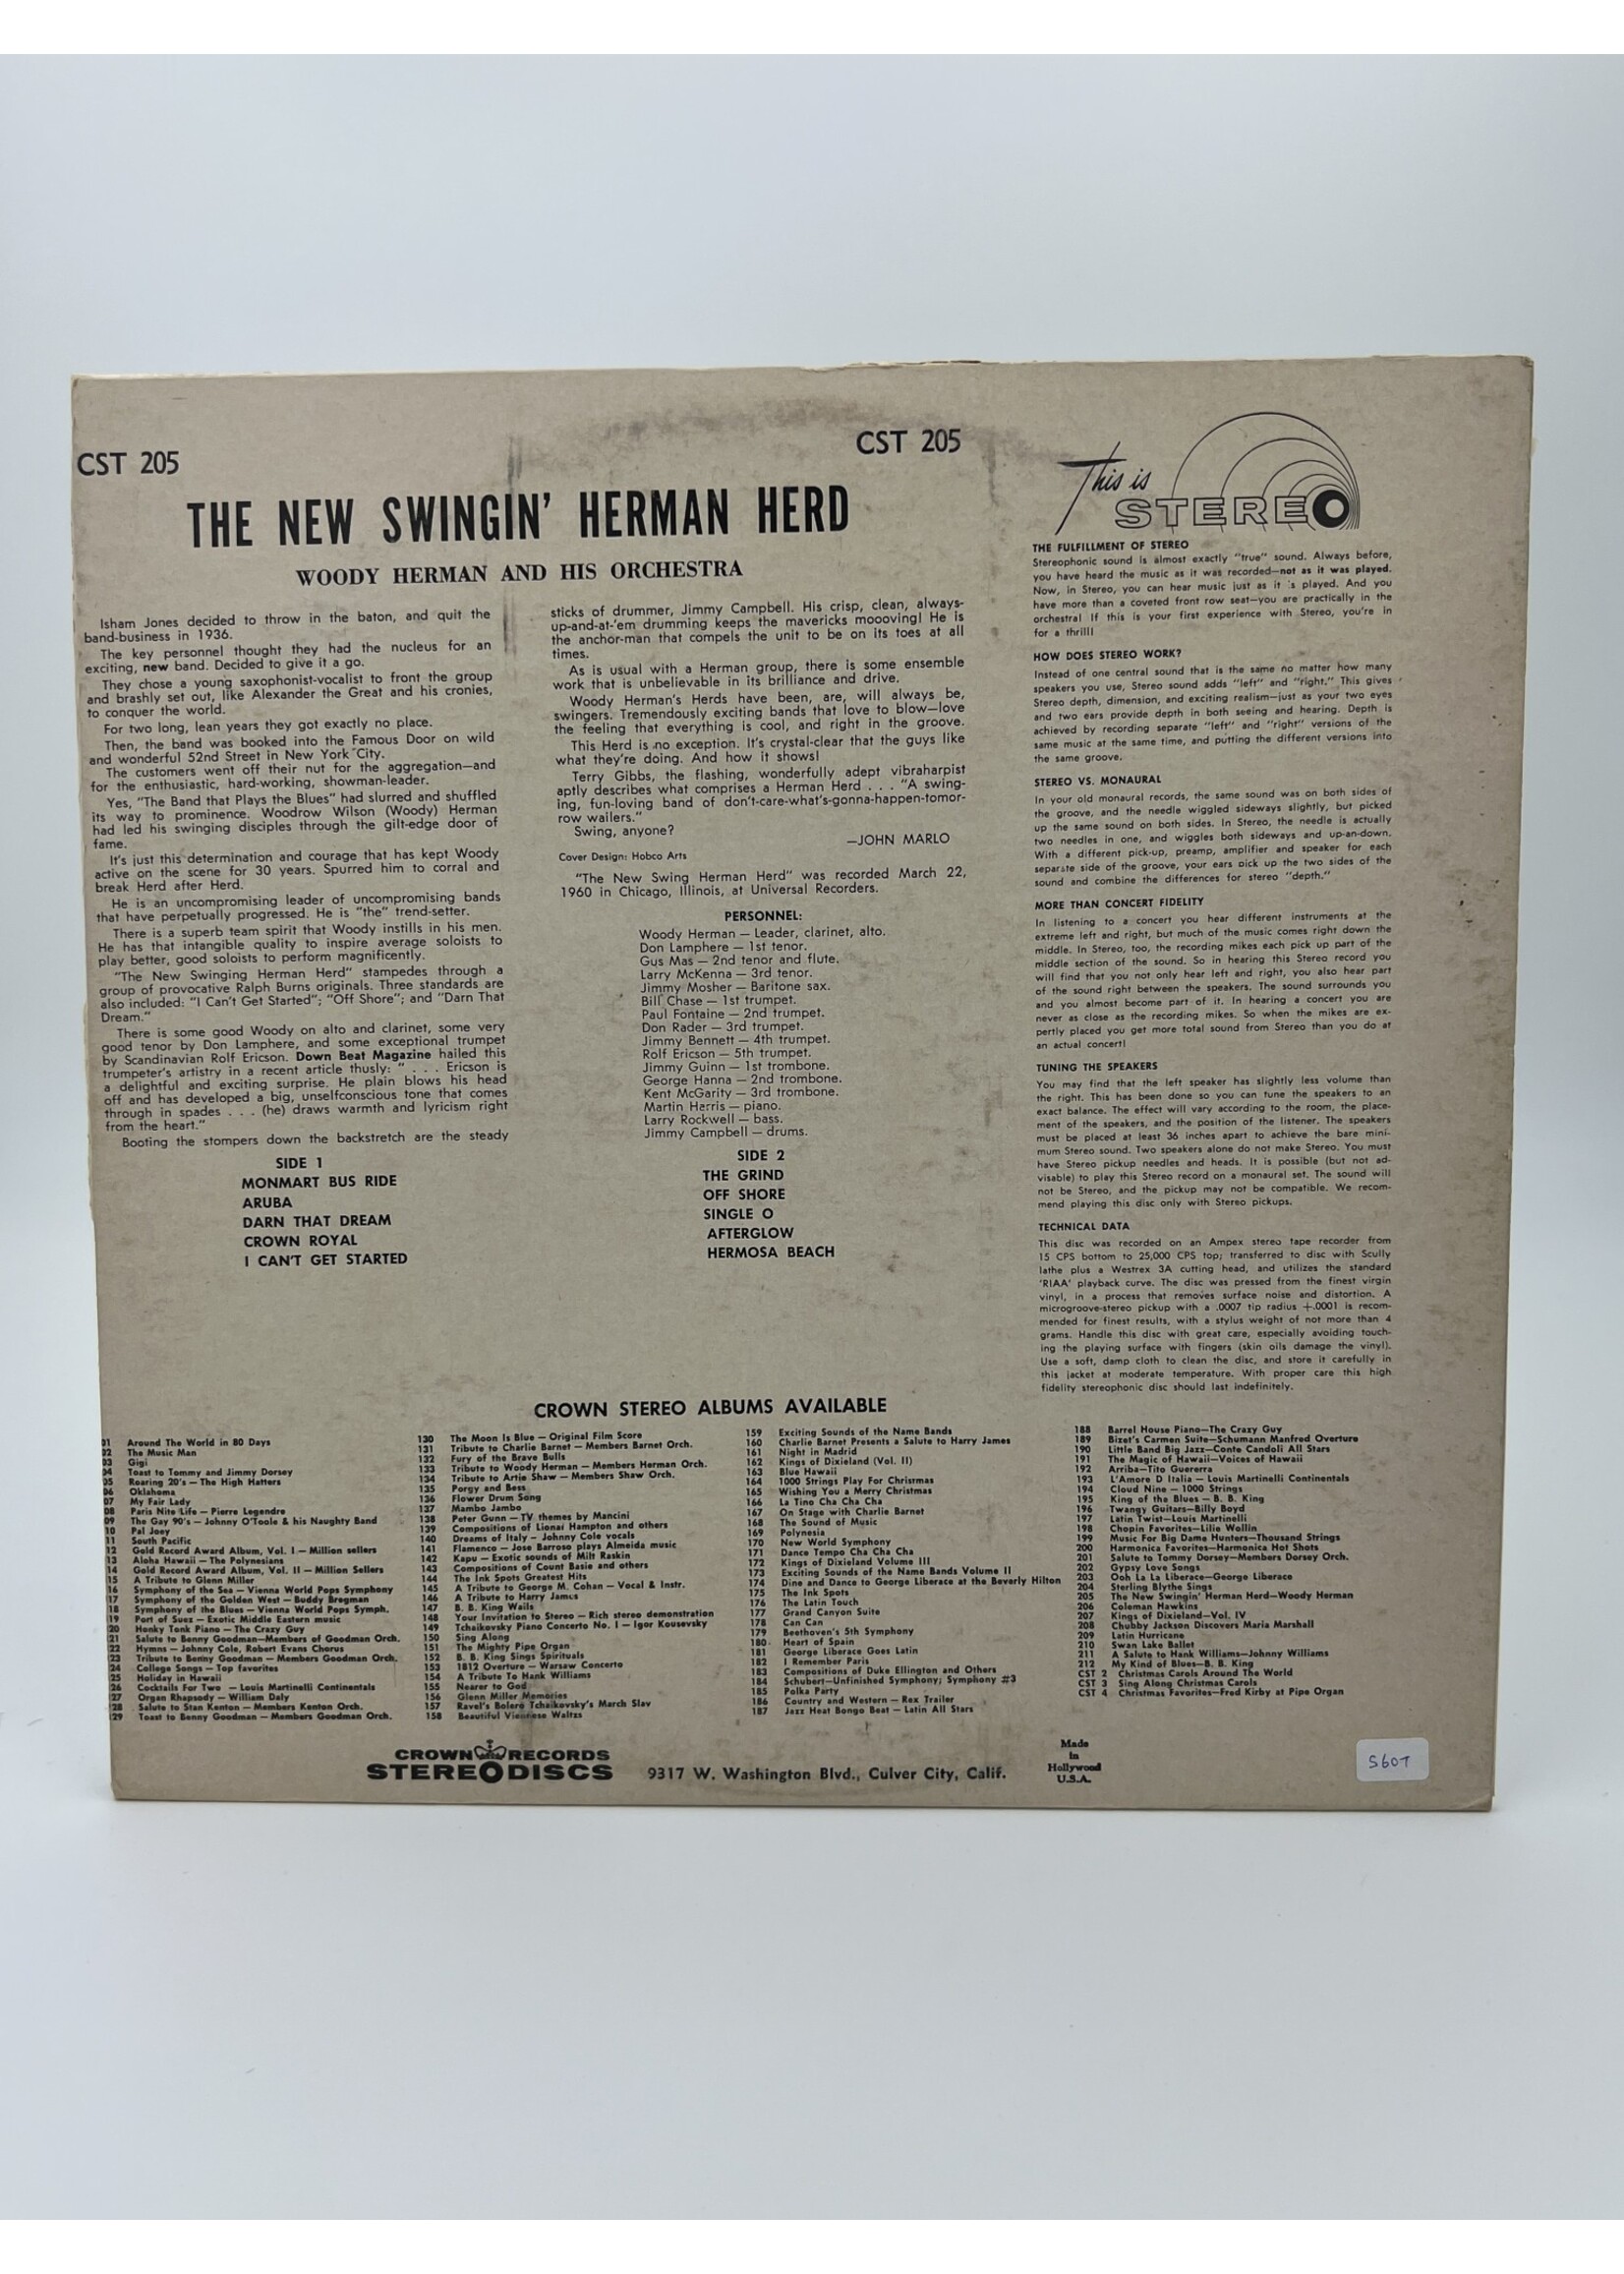 LP   Woody Herman The New Swingin Herman Herd Red Vinyl LP Record